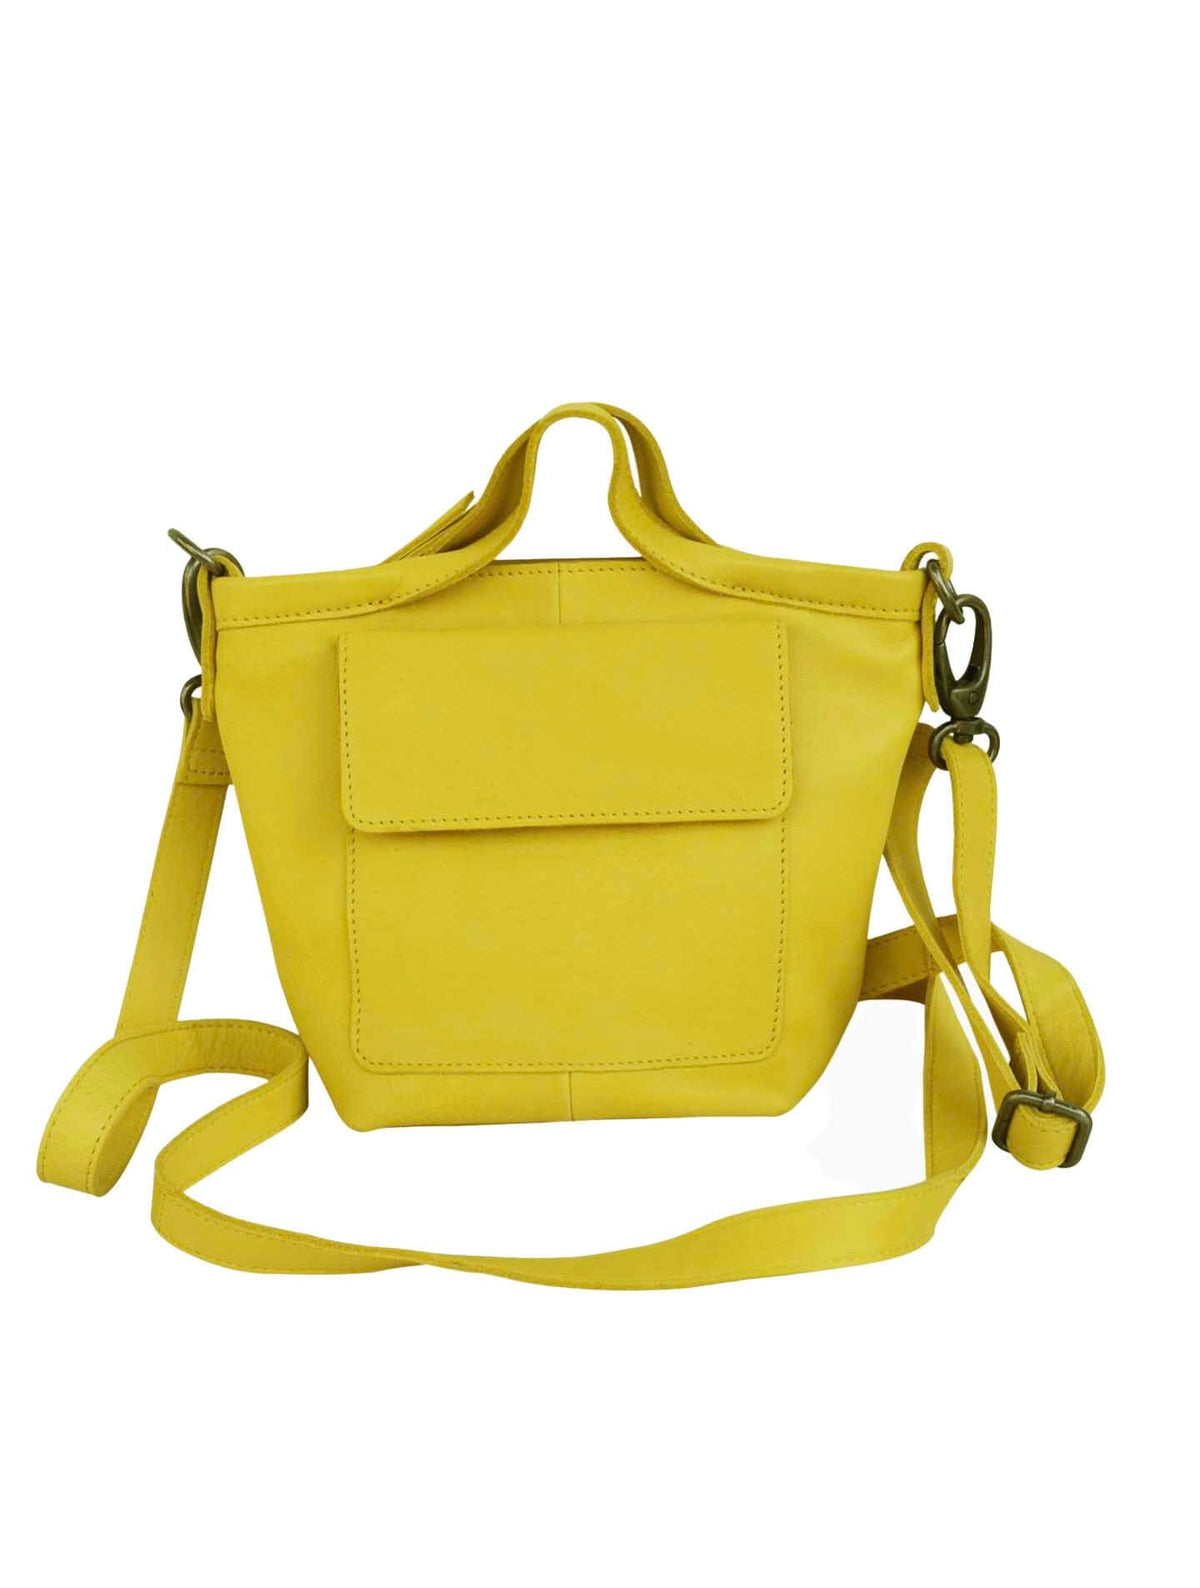 Latico Mick Leather Crossbody Bag in Lemon